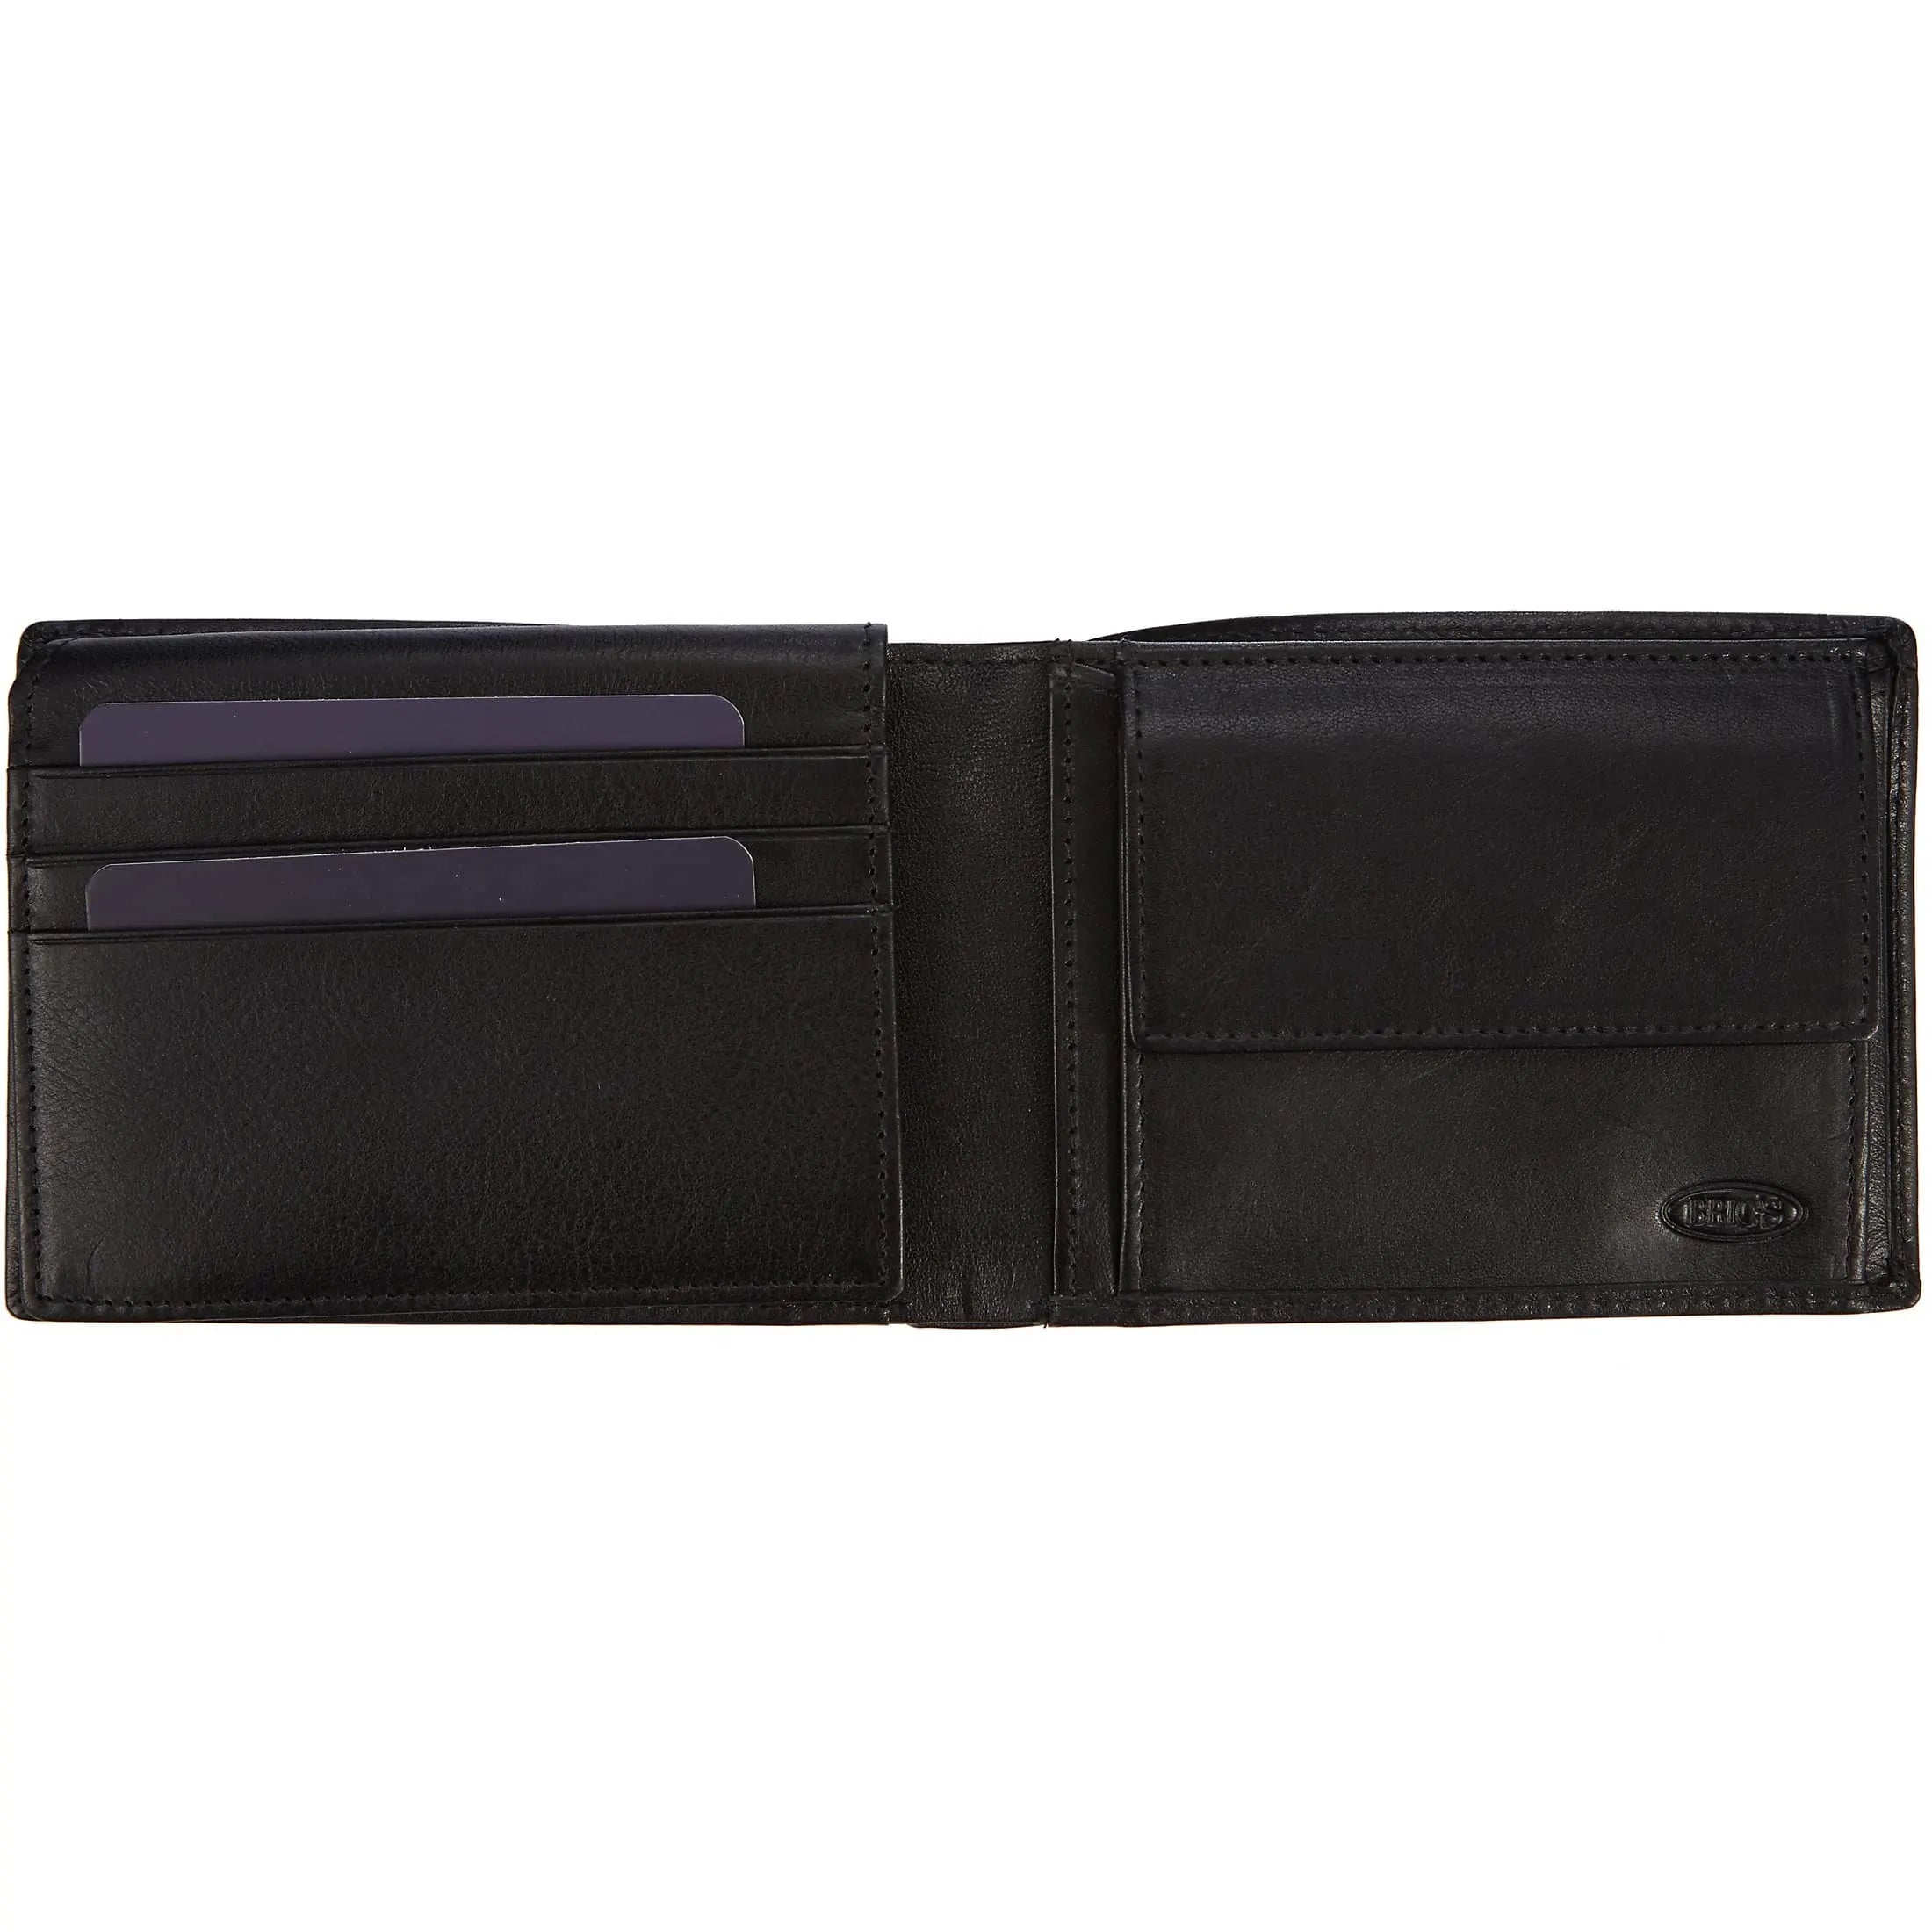 Brics Monte Rosa wallet RFID 12 cm - brown